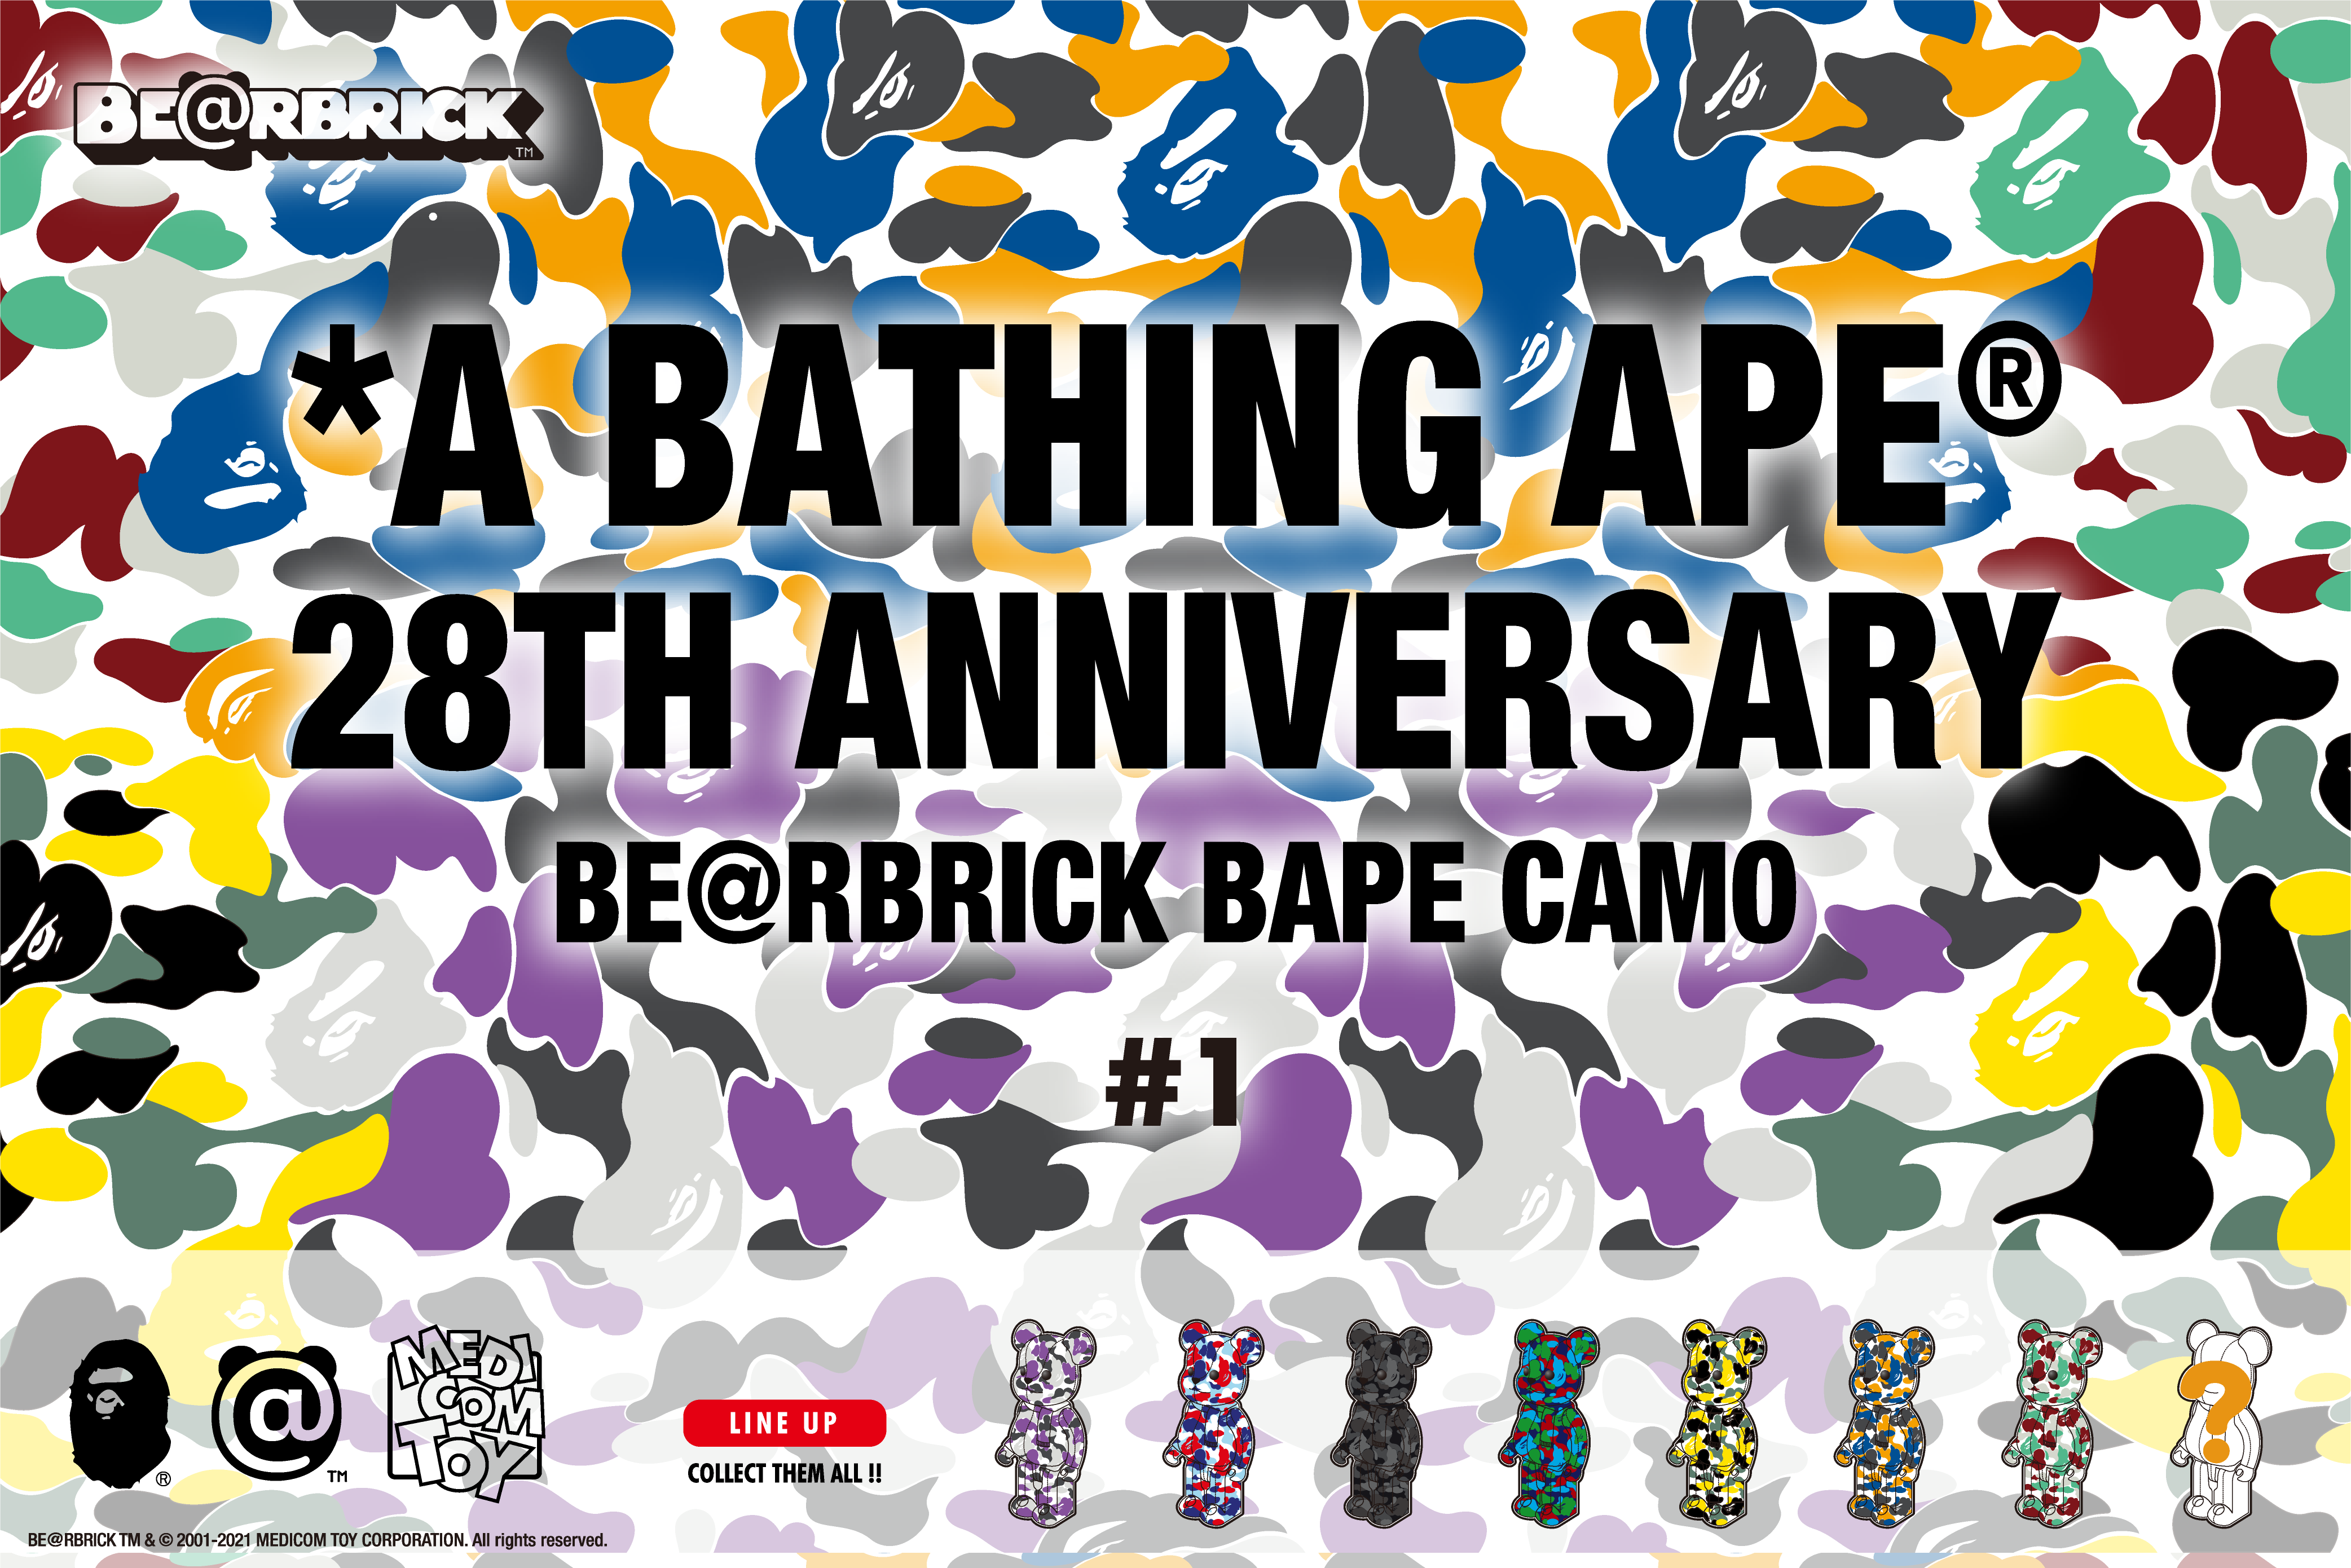 A BATHING APE 28TH ANNIVERSARY BE@RBRICK